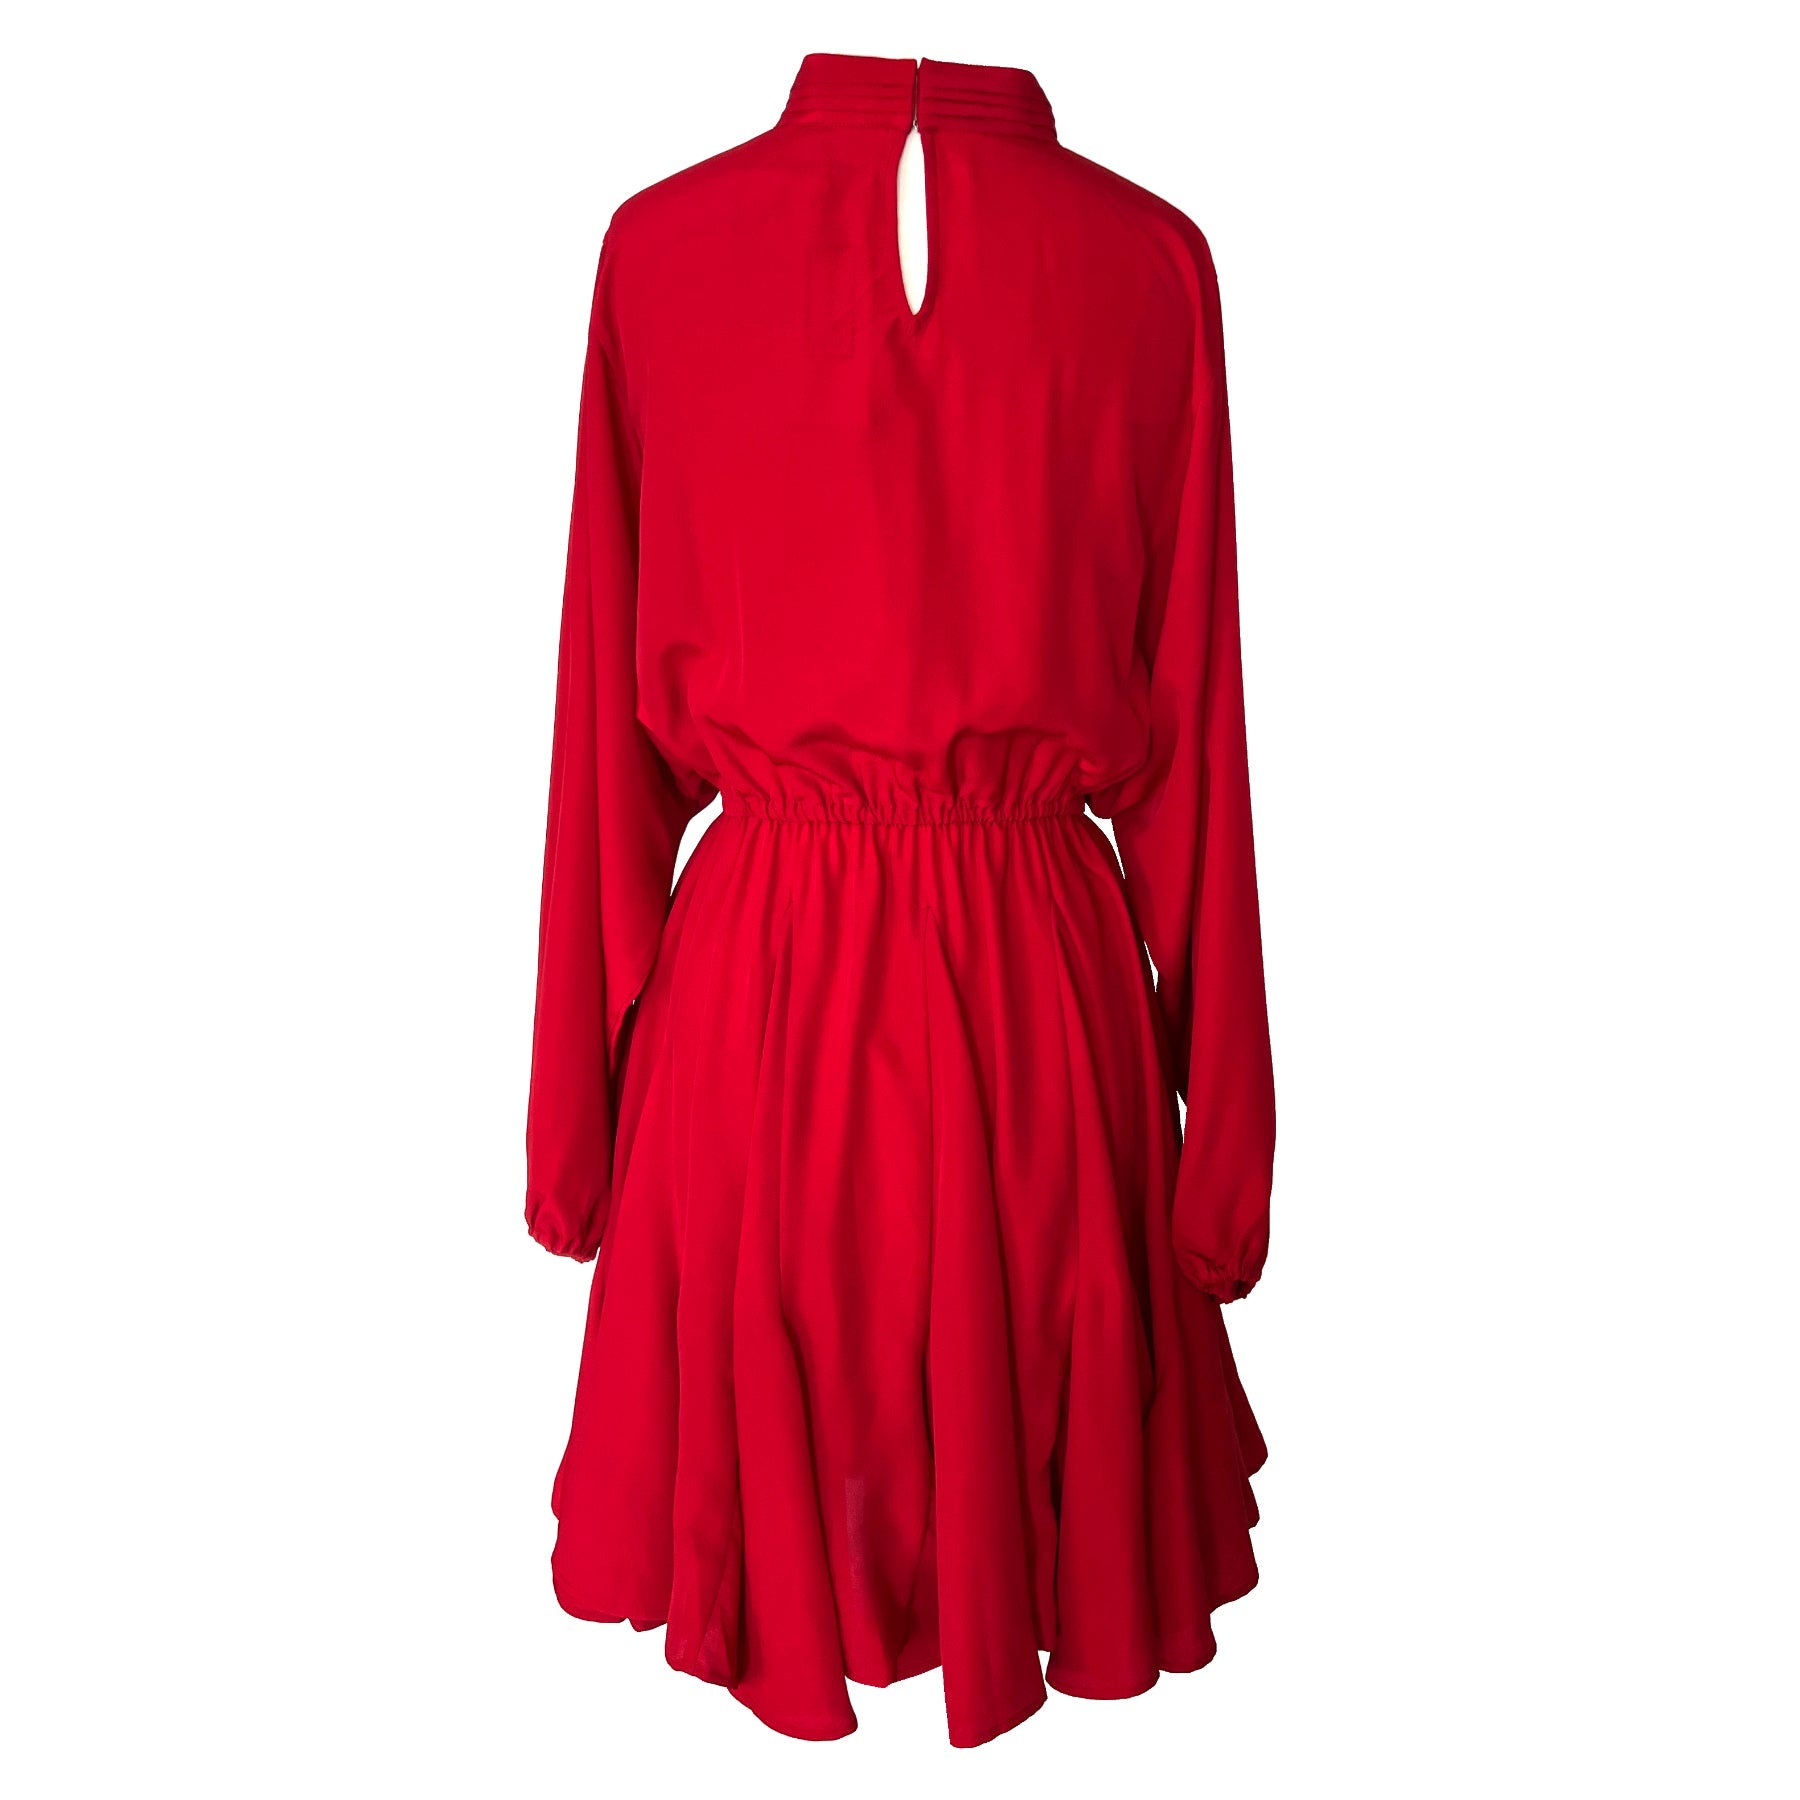 Rhode Mini Dress Ruby Red High Neck Long Balloon Sleeve Flared Skirt Dress